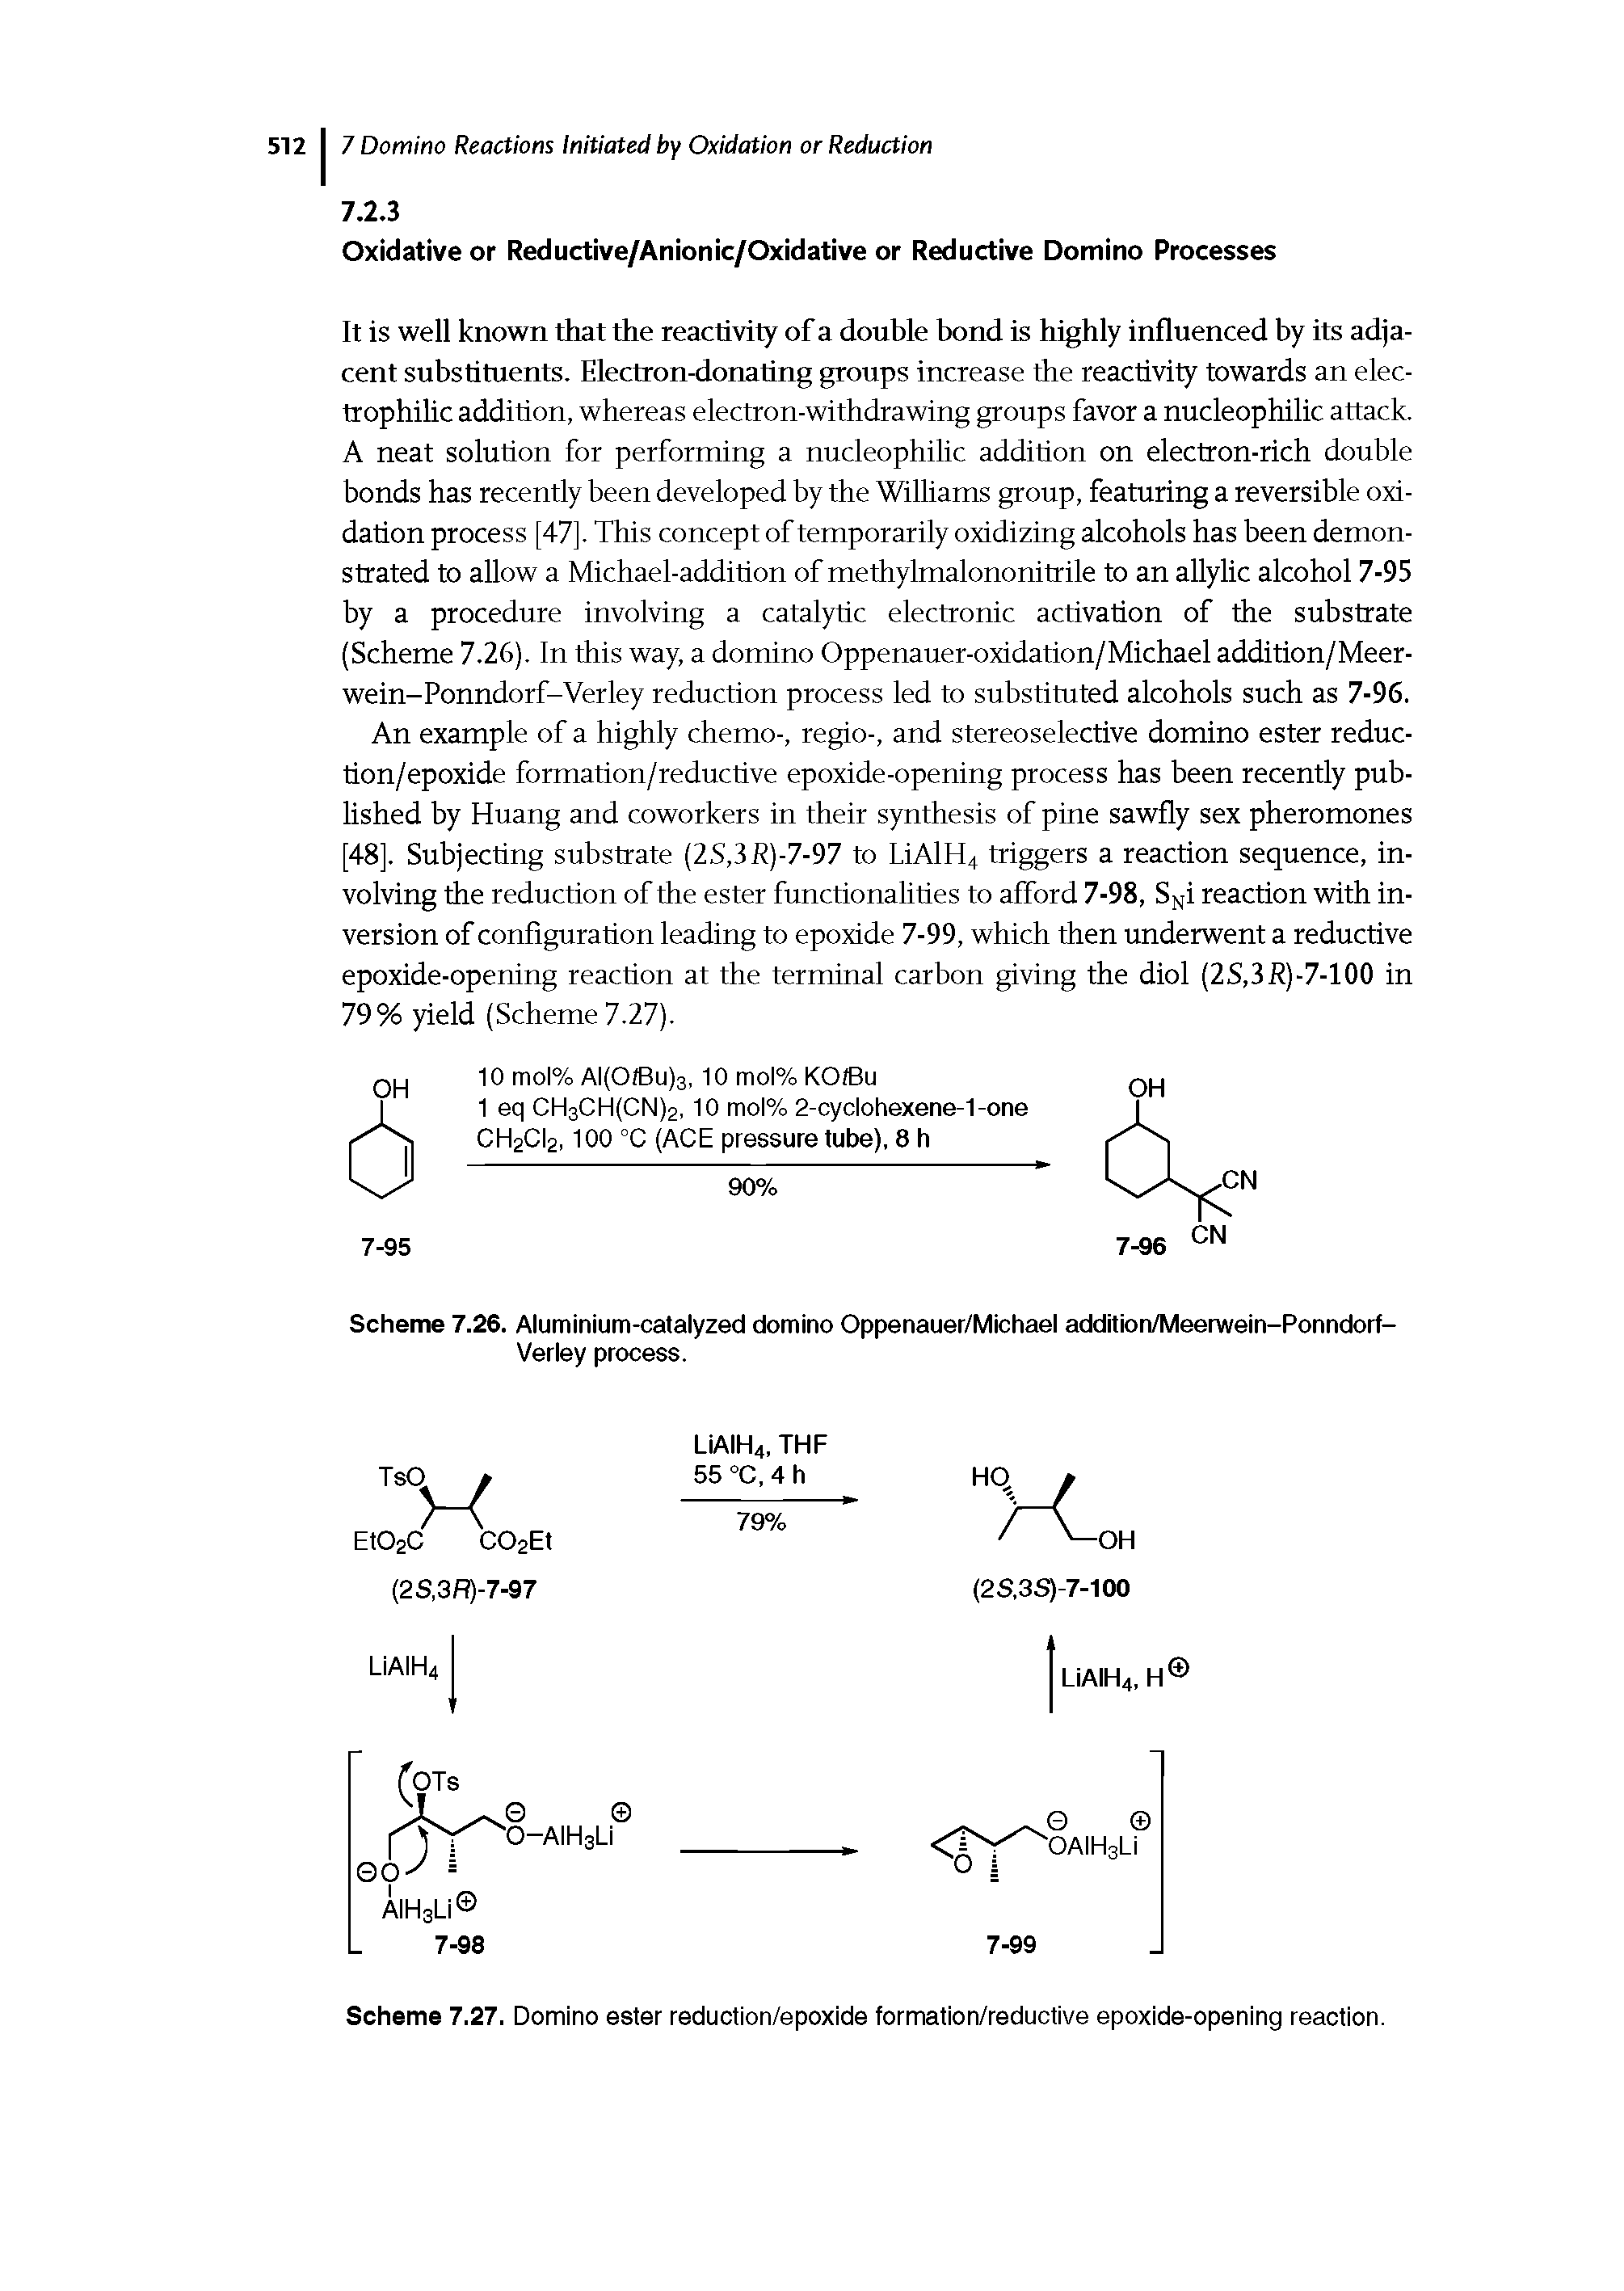 Scheme 7.27. Domino ester reduction/epoxide formation/reductive epoxide-opening reaction.